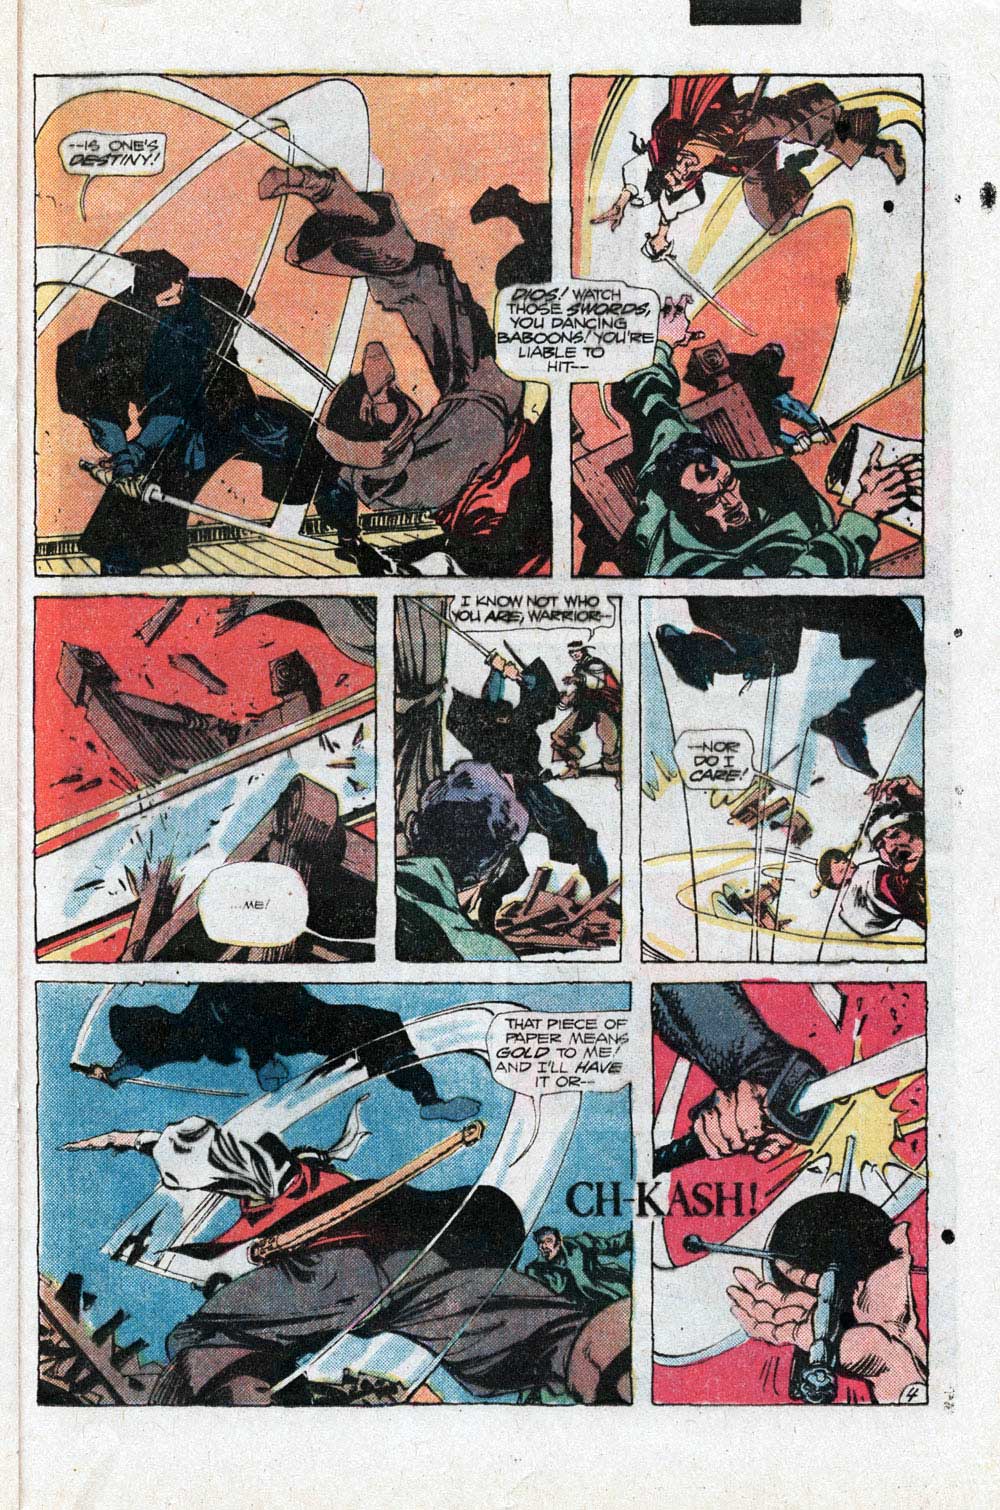 Unknown Soldier #255 (1981) by David Michelinie and Walt Simonson